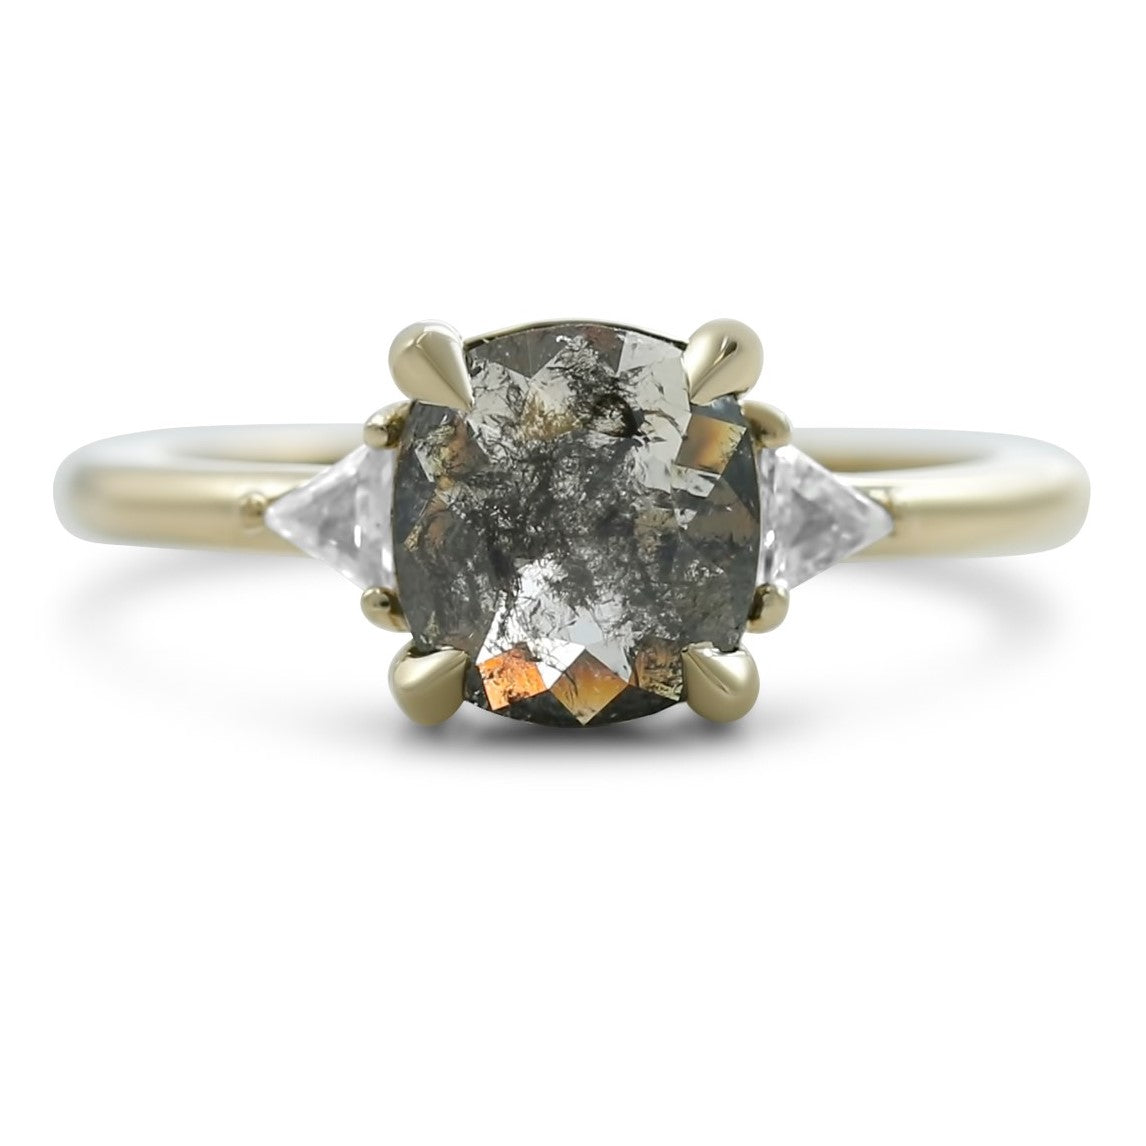 New Gray and Black Diamond Engagement Rings! | Philadelphia Jeweler Sells Gray and Black Unique Diamond Engagement Rings Online and In Studio